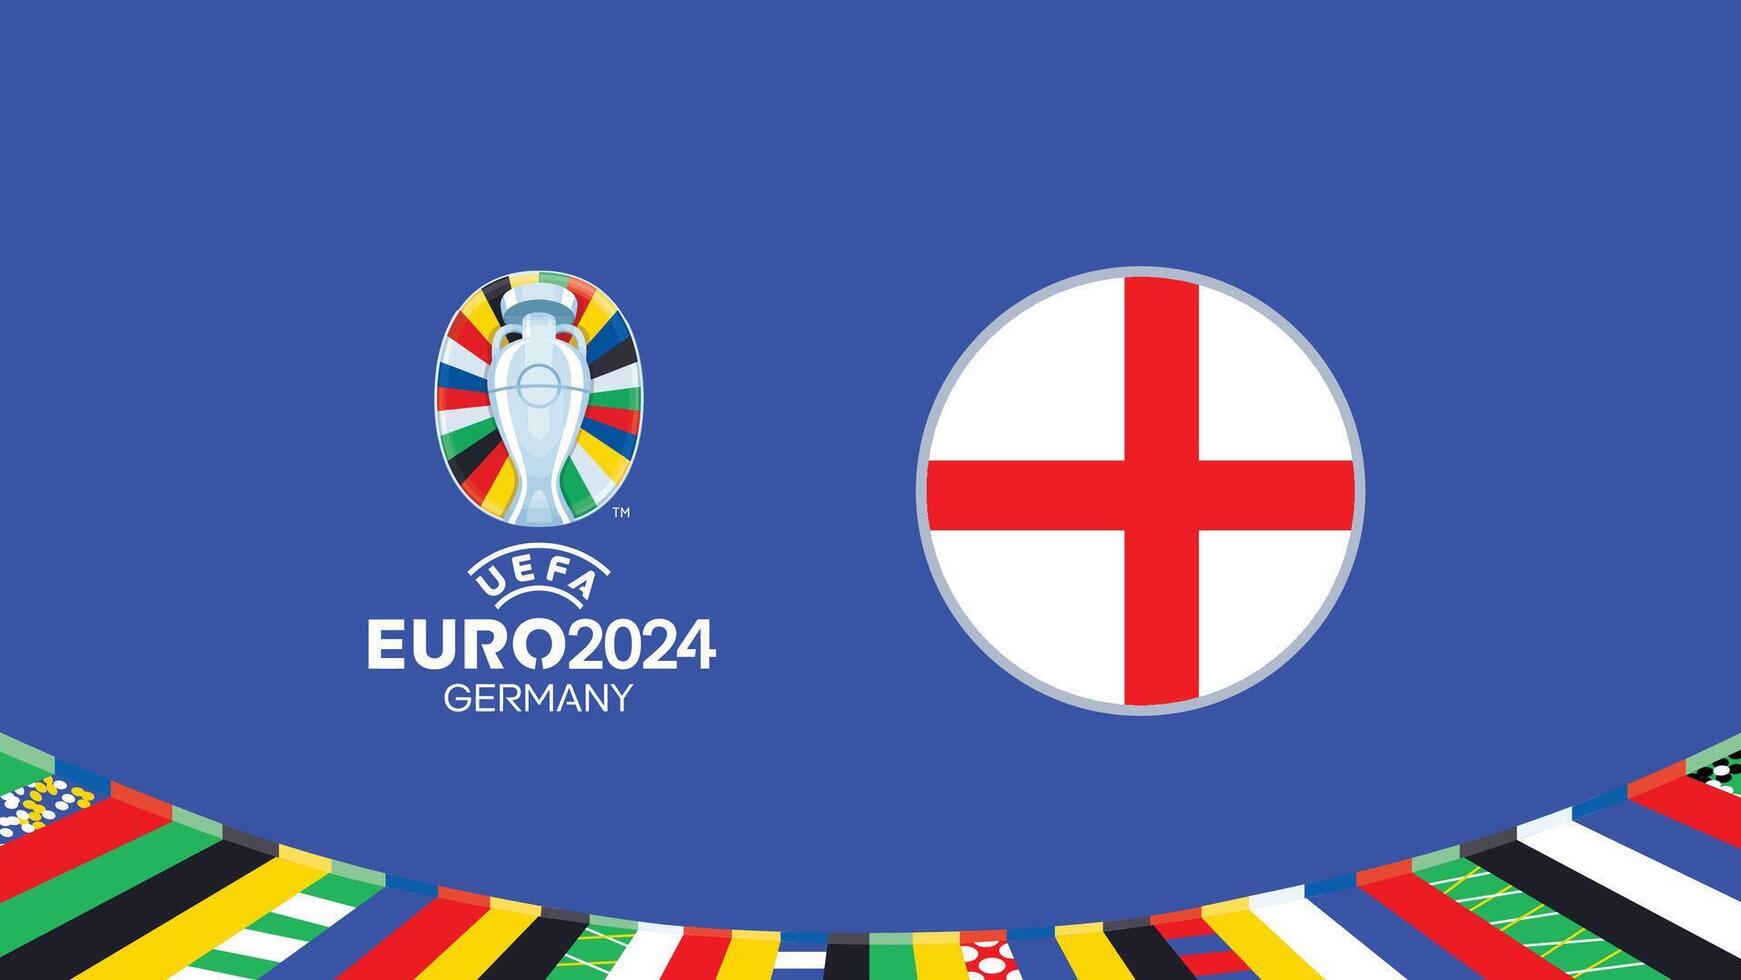 Euro 2024 Deutschland England Flagge Teams Design mit offiziell Symbol Logo abstrakt Länder europäisch Fußball Illustration vektor